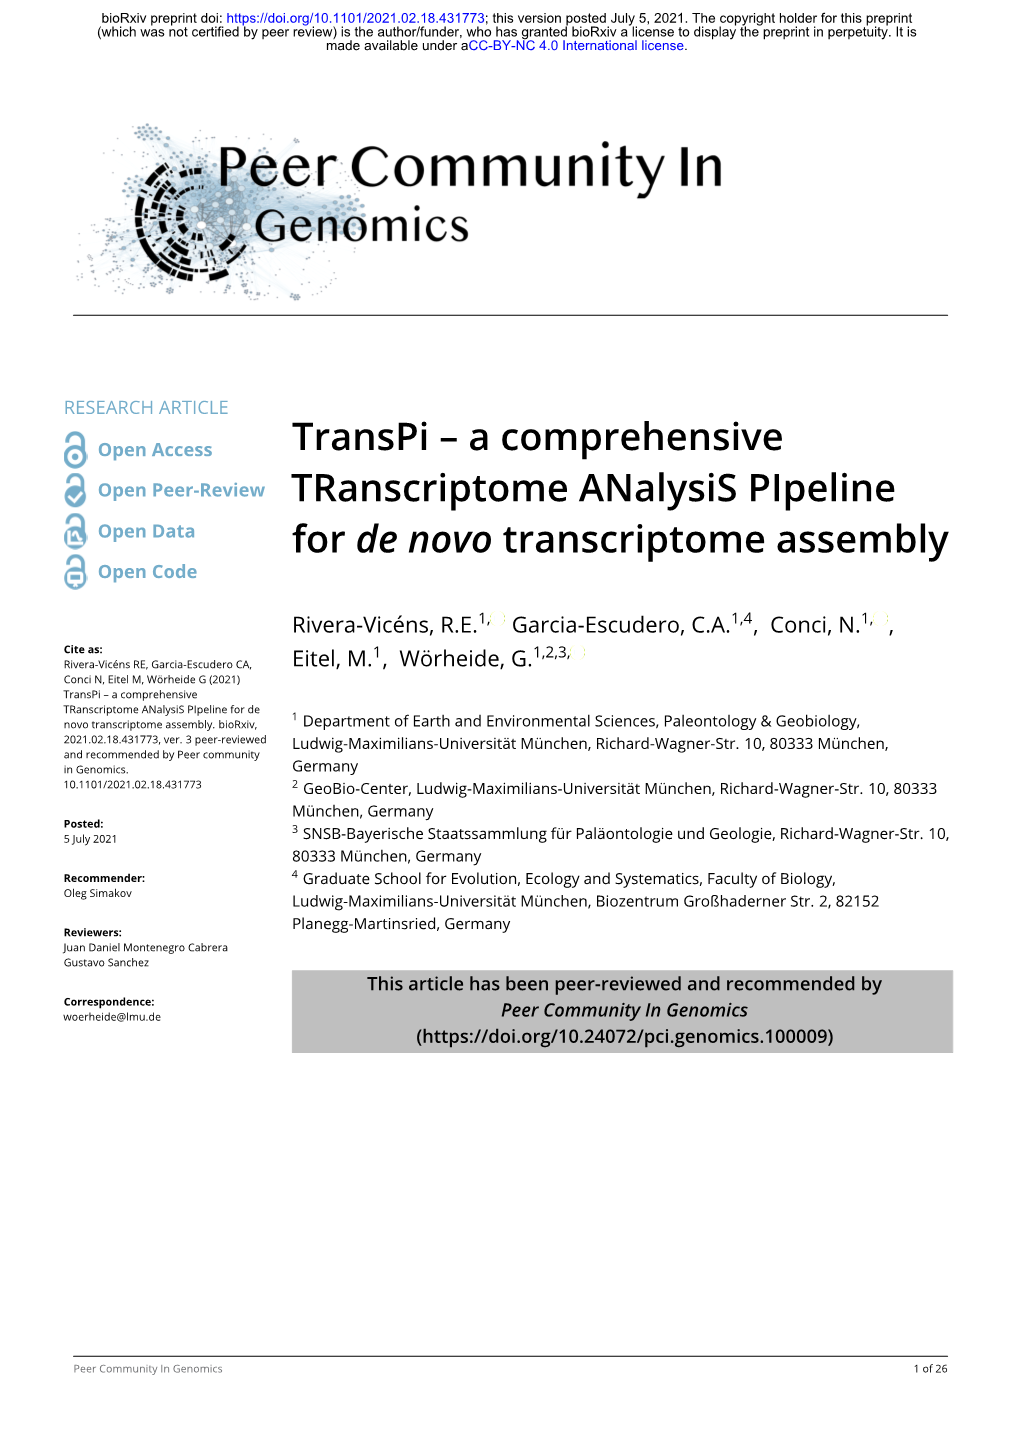 Transpi – a Comprehensive Open Peer-Review Transcriptome Analysis Pipeline Open Data for De Novo Transcriptome Assembly Open Code